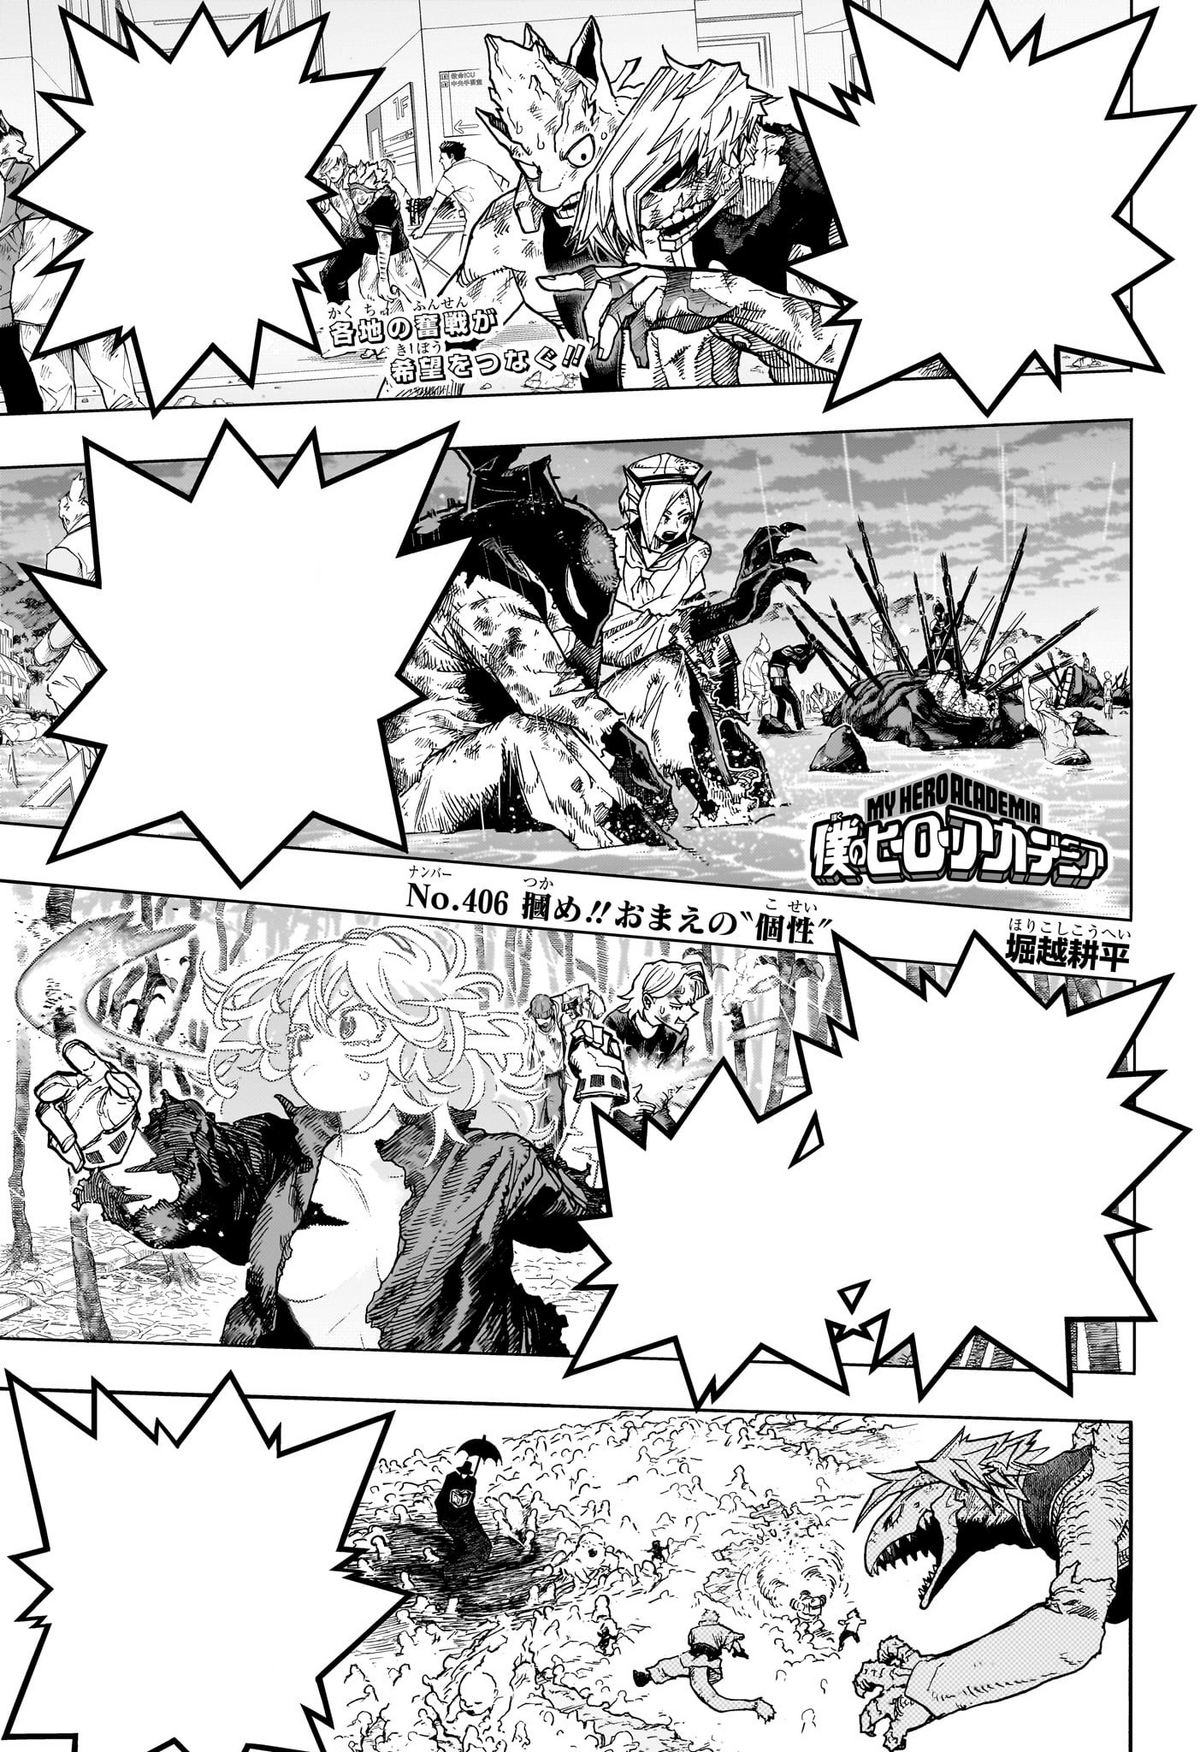 Boku no Hero Academia Capítulo 406 - Manga Online